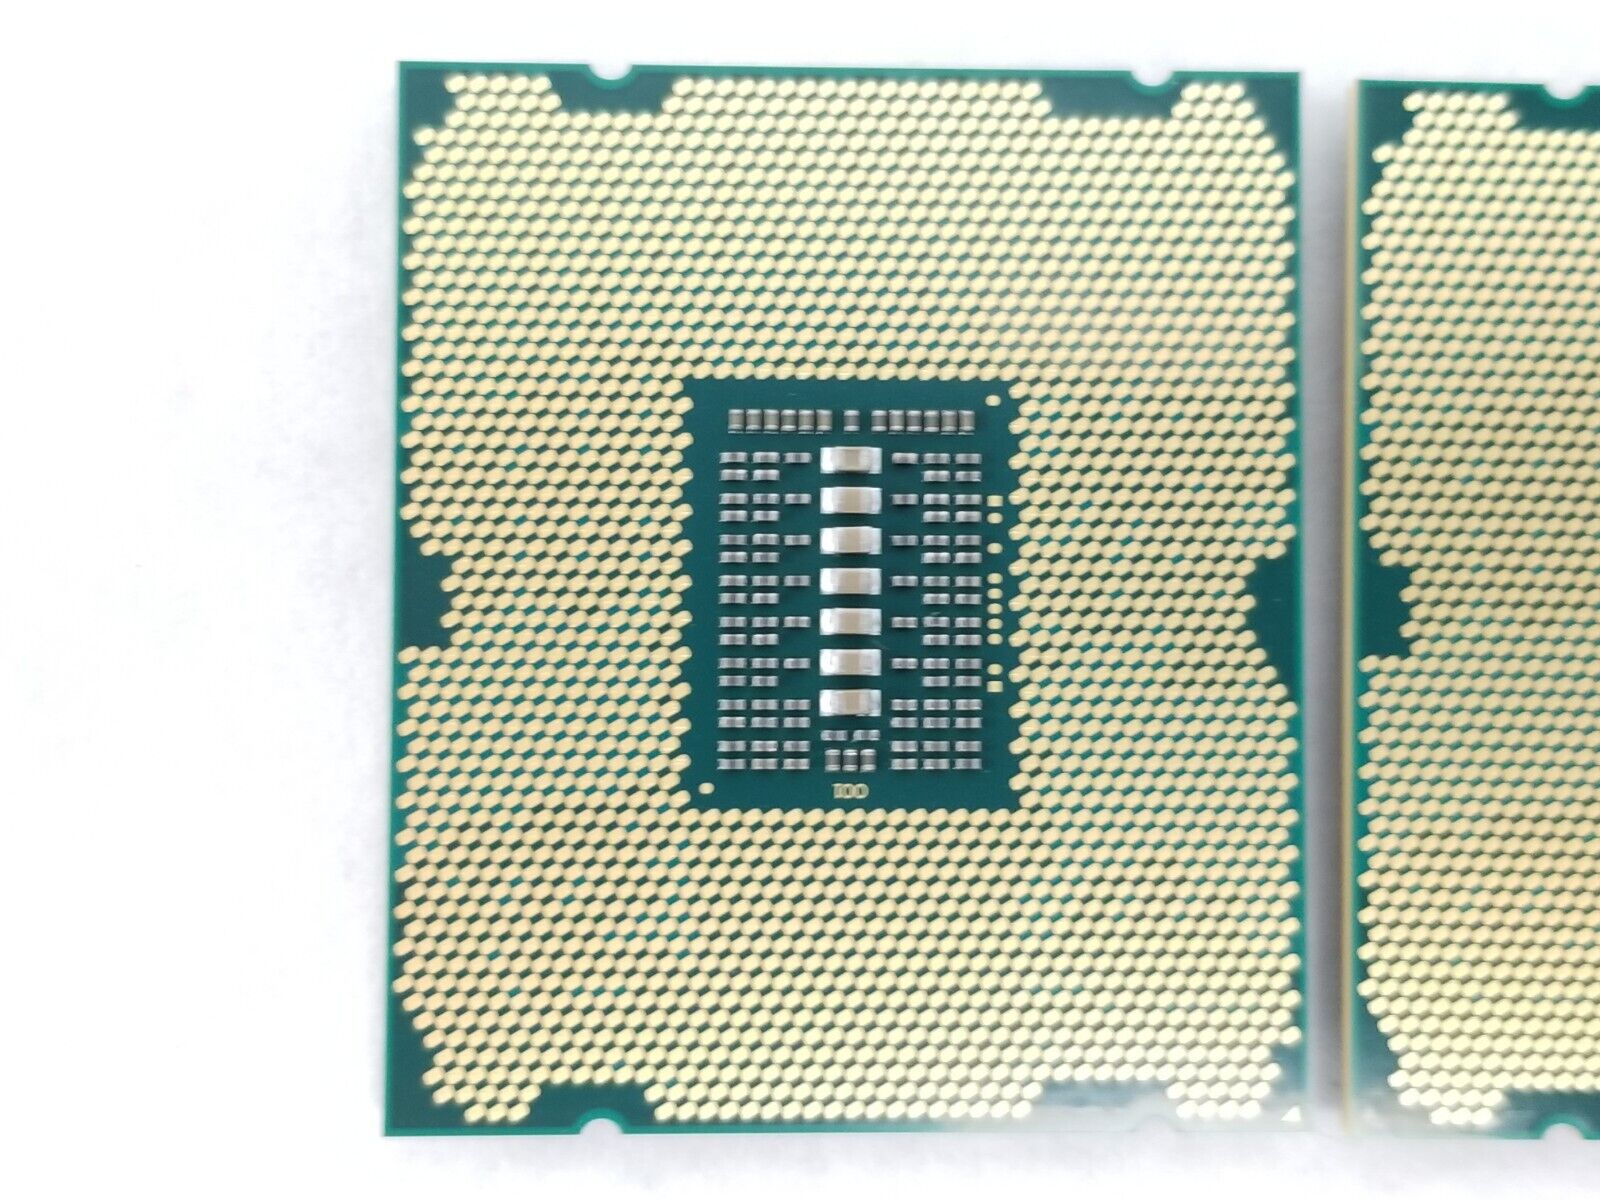 Matching Pair Intel Xeon E5-2670V2 SR1A7 2.50GHz LGA2011 Server CPU Processor